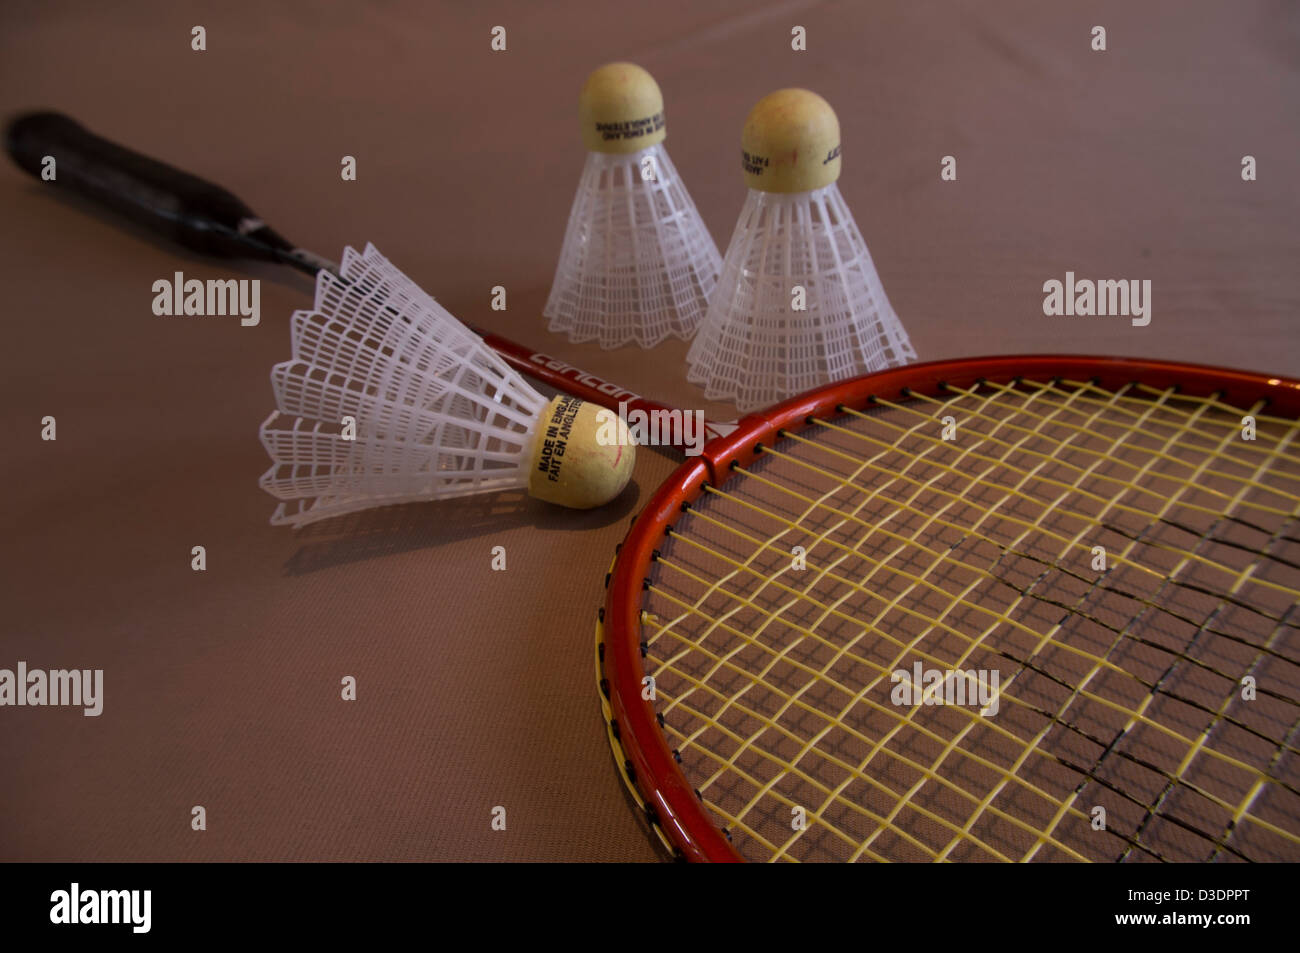 badminton racket and shuttlecocks Stock Photo